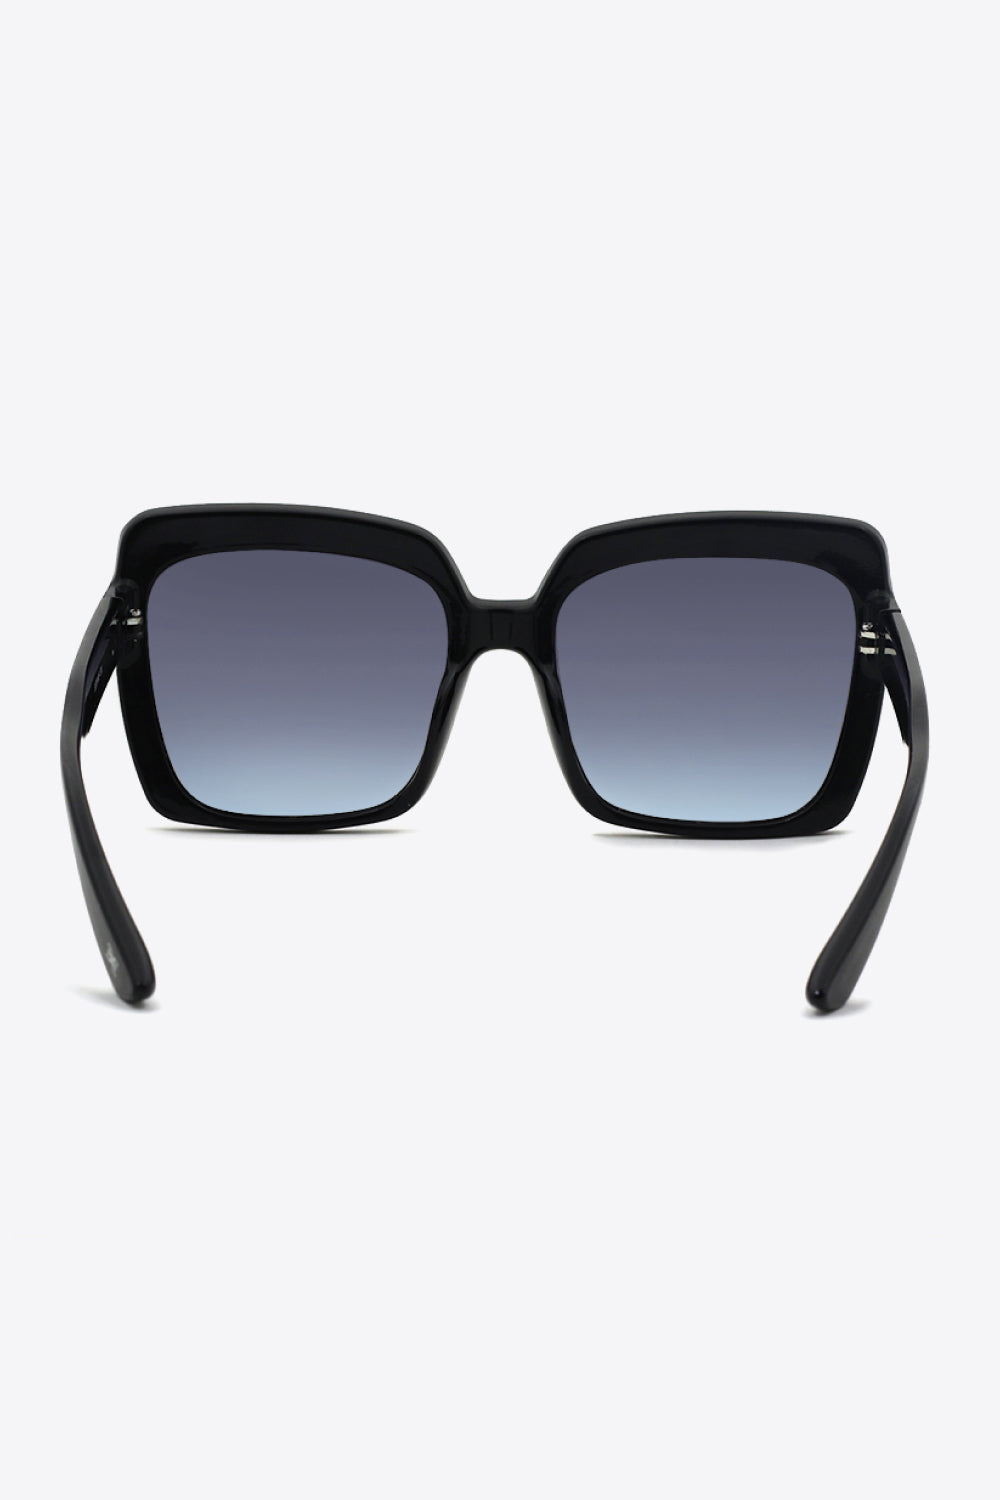 Square Full Rim Sunglasses - The Fashion Unicorn